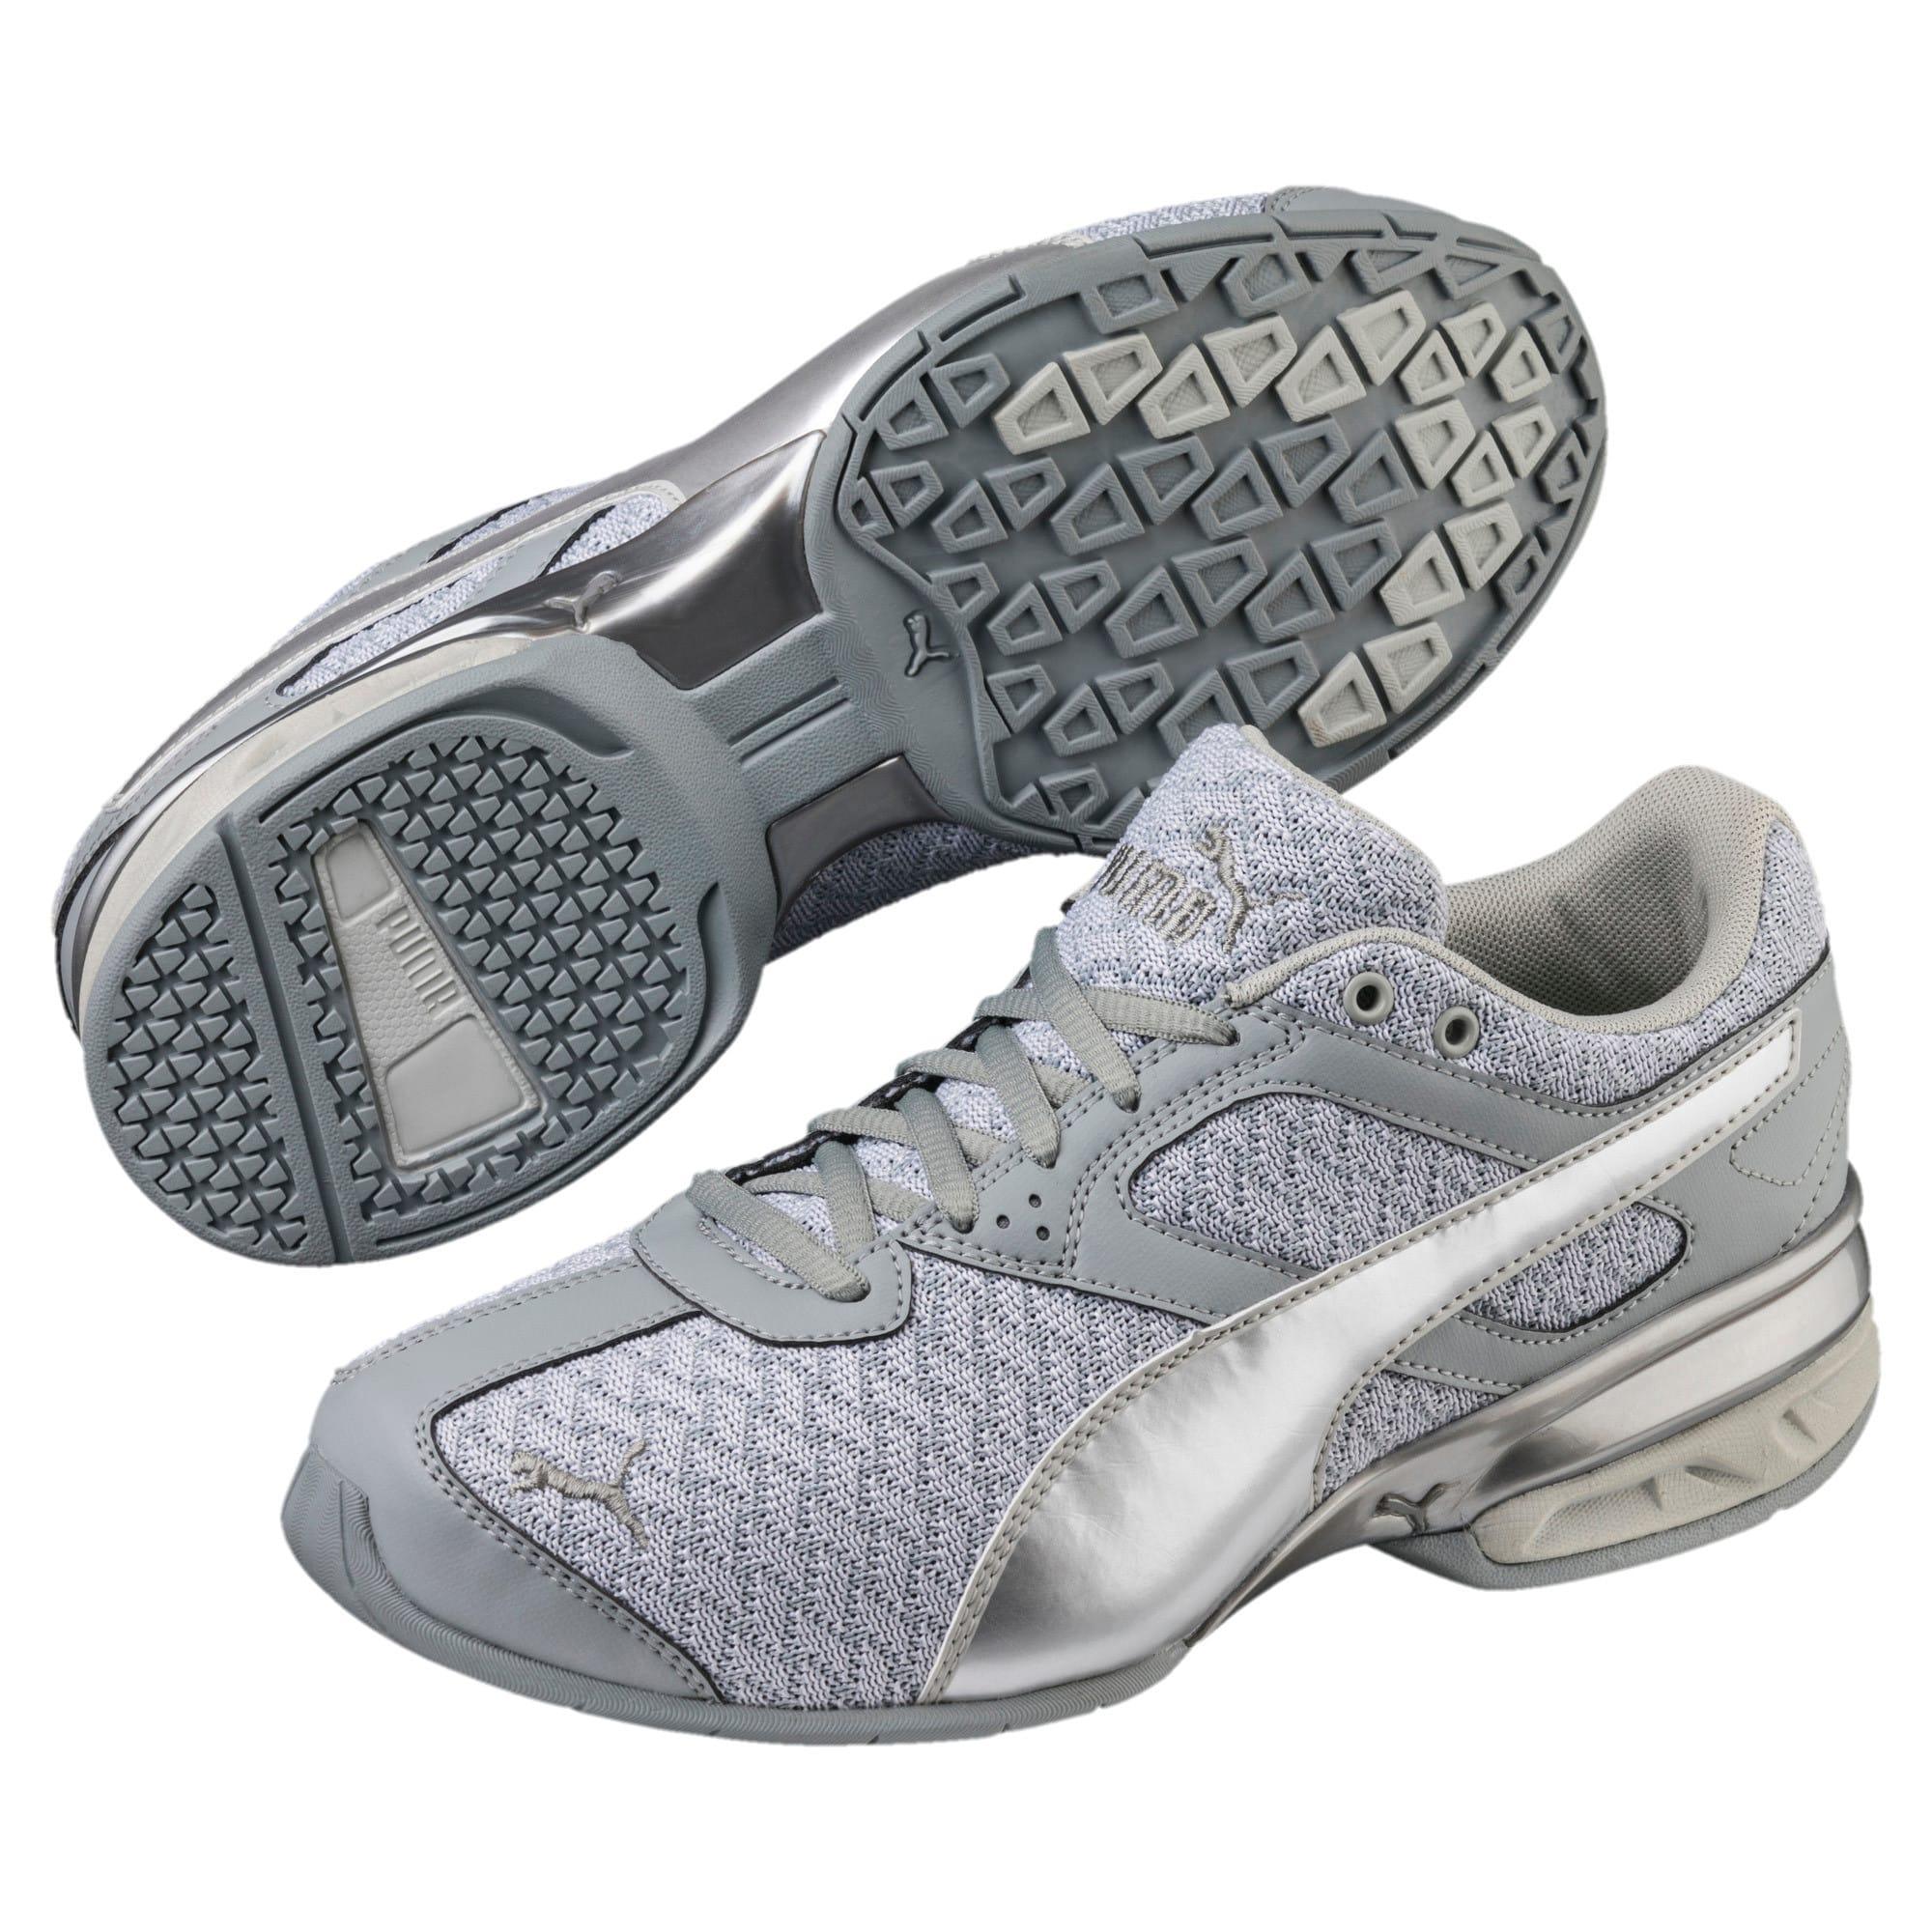 PUMA Synthetic Tazon 6 Luxe Women's Sneakers in 02 (Gray) - Lyst